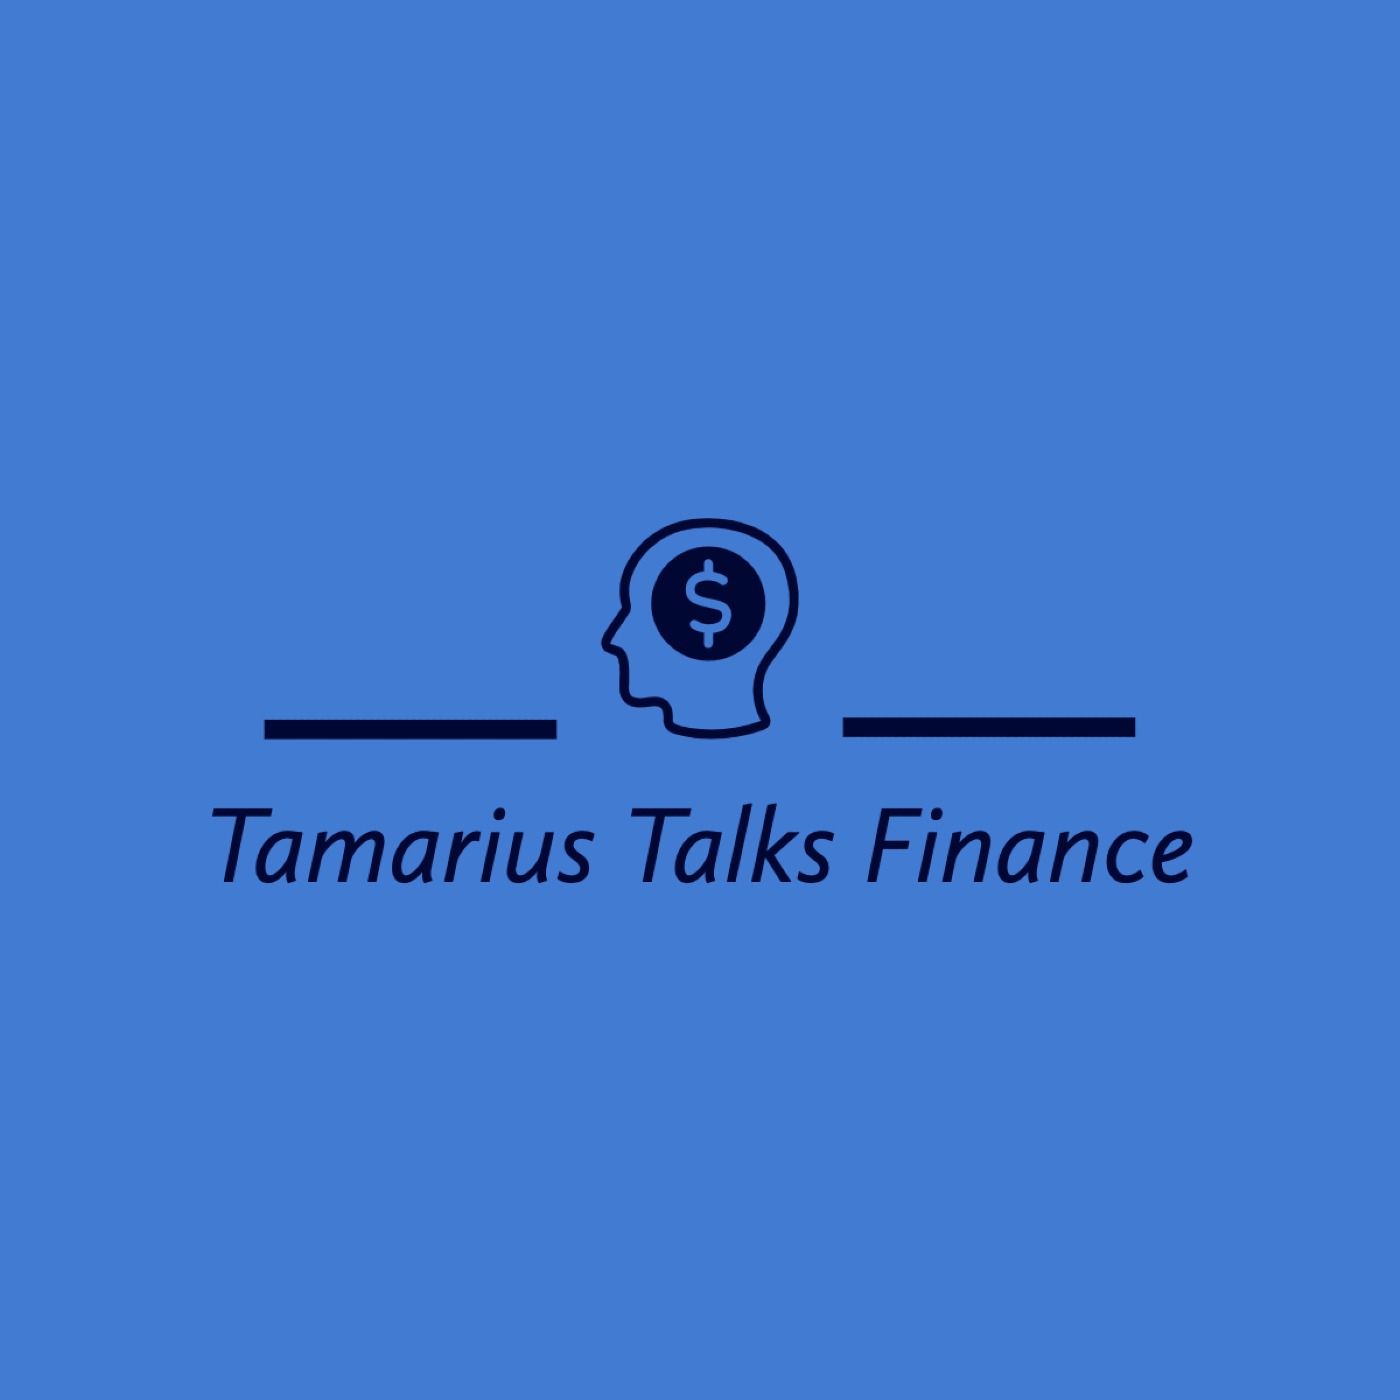 Tamarius Talks Finance